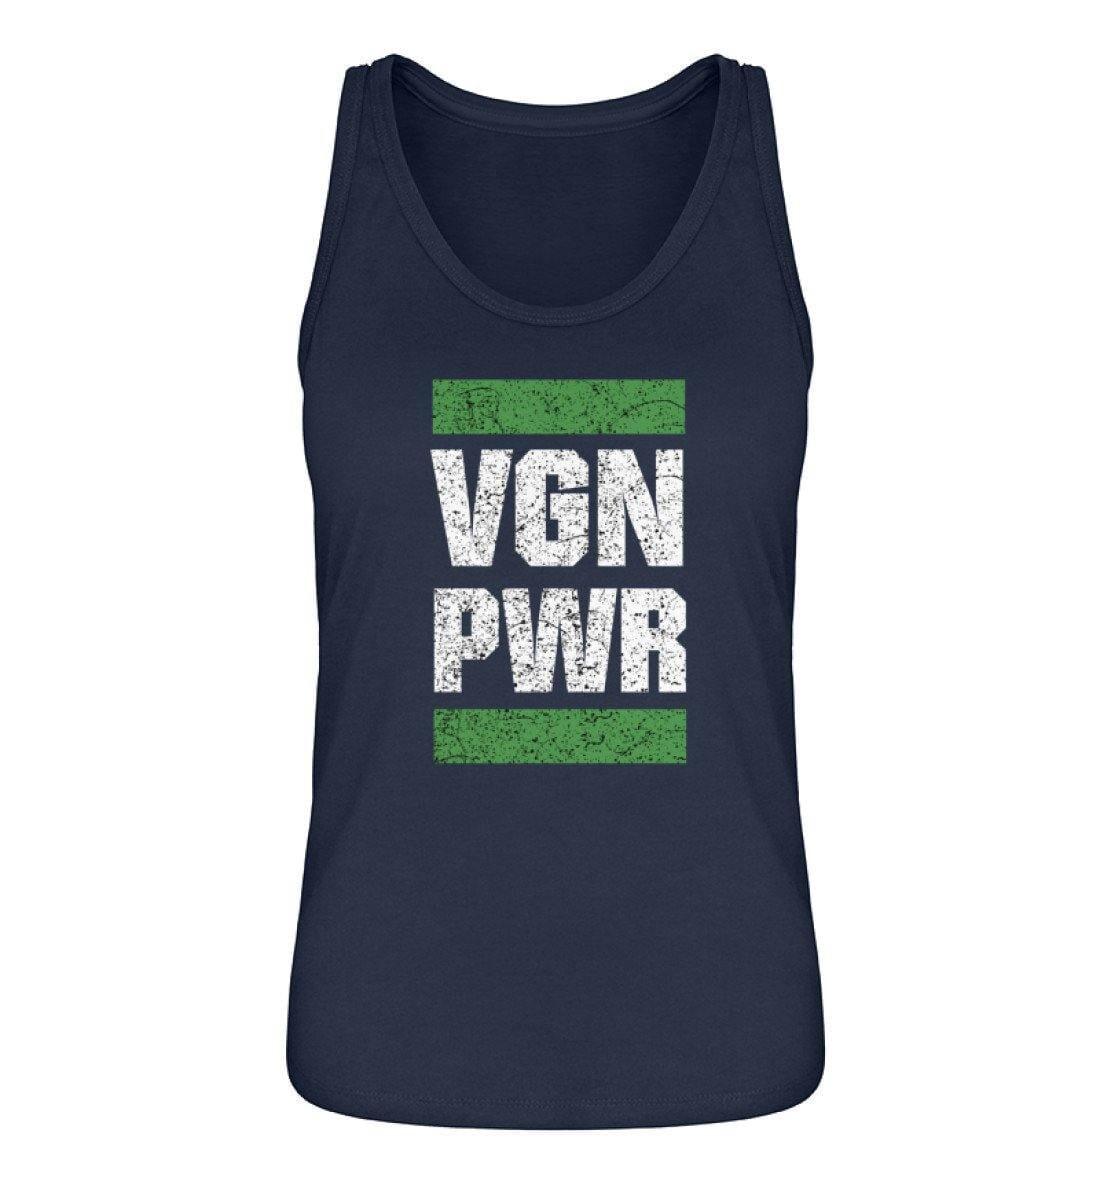 VGN PWR - Damen Organic Tanktop - Team Vegan © vegan t shirt